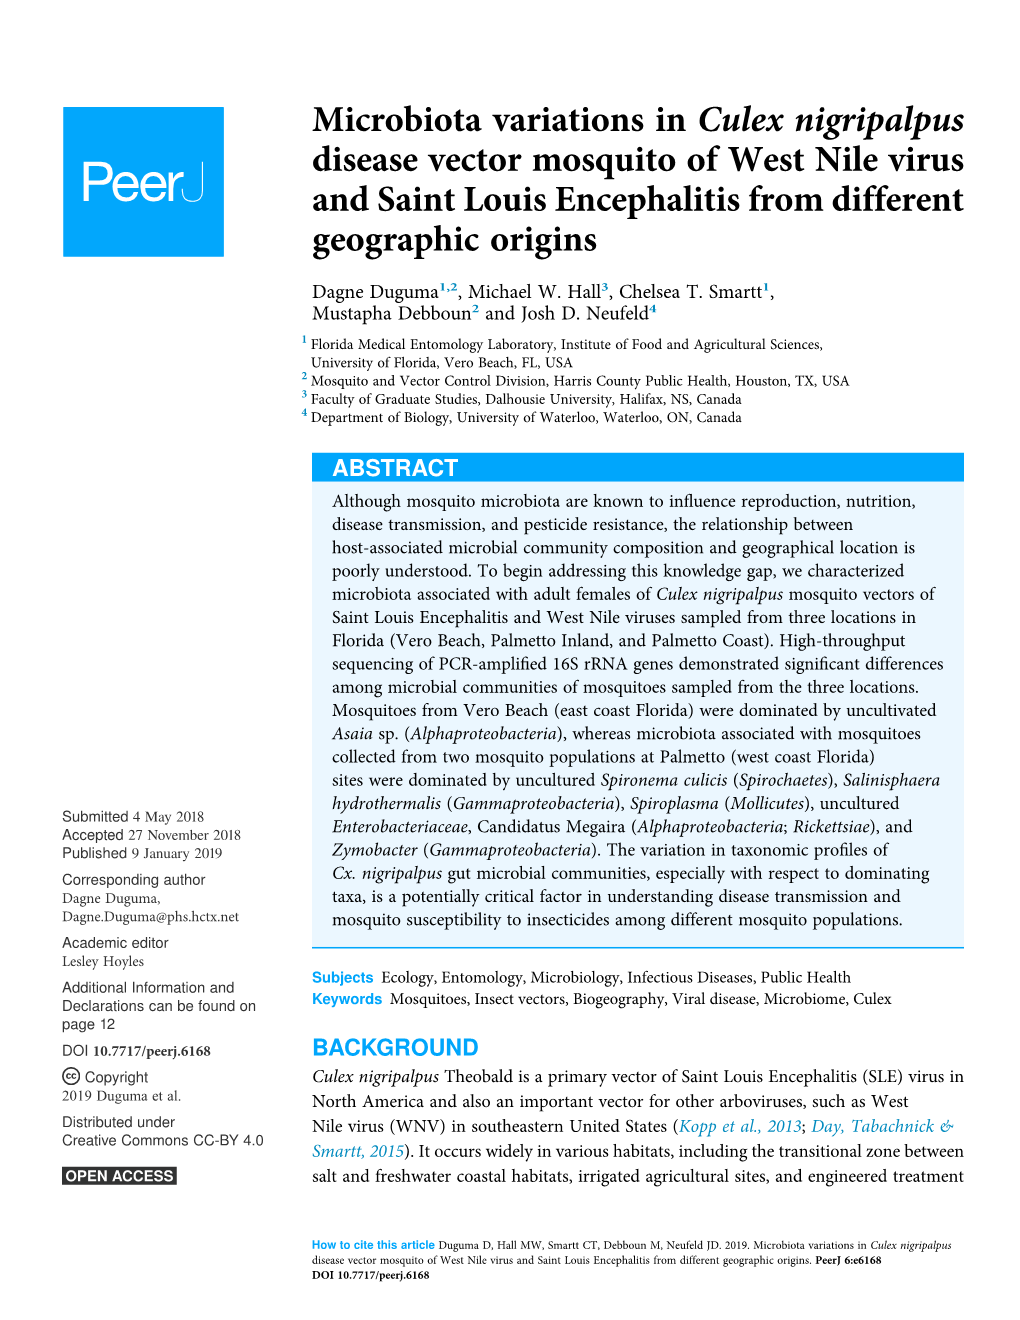 Microbiota Variations in Culex Nigripalpus Disease Vector Mosquito of West Nile Virus and Saint Louis Encephalitis from Different Geographic Origins